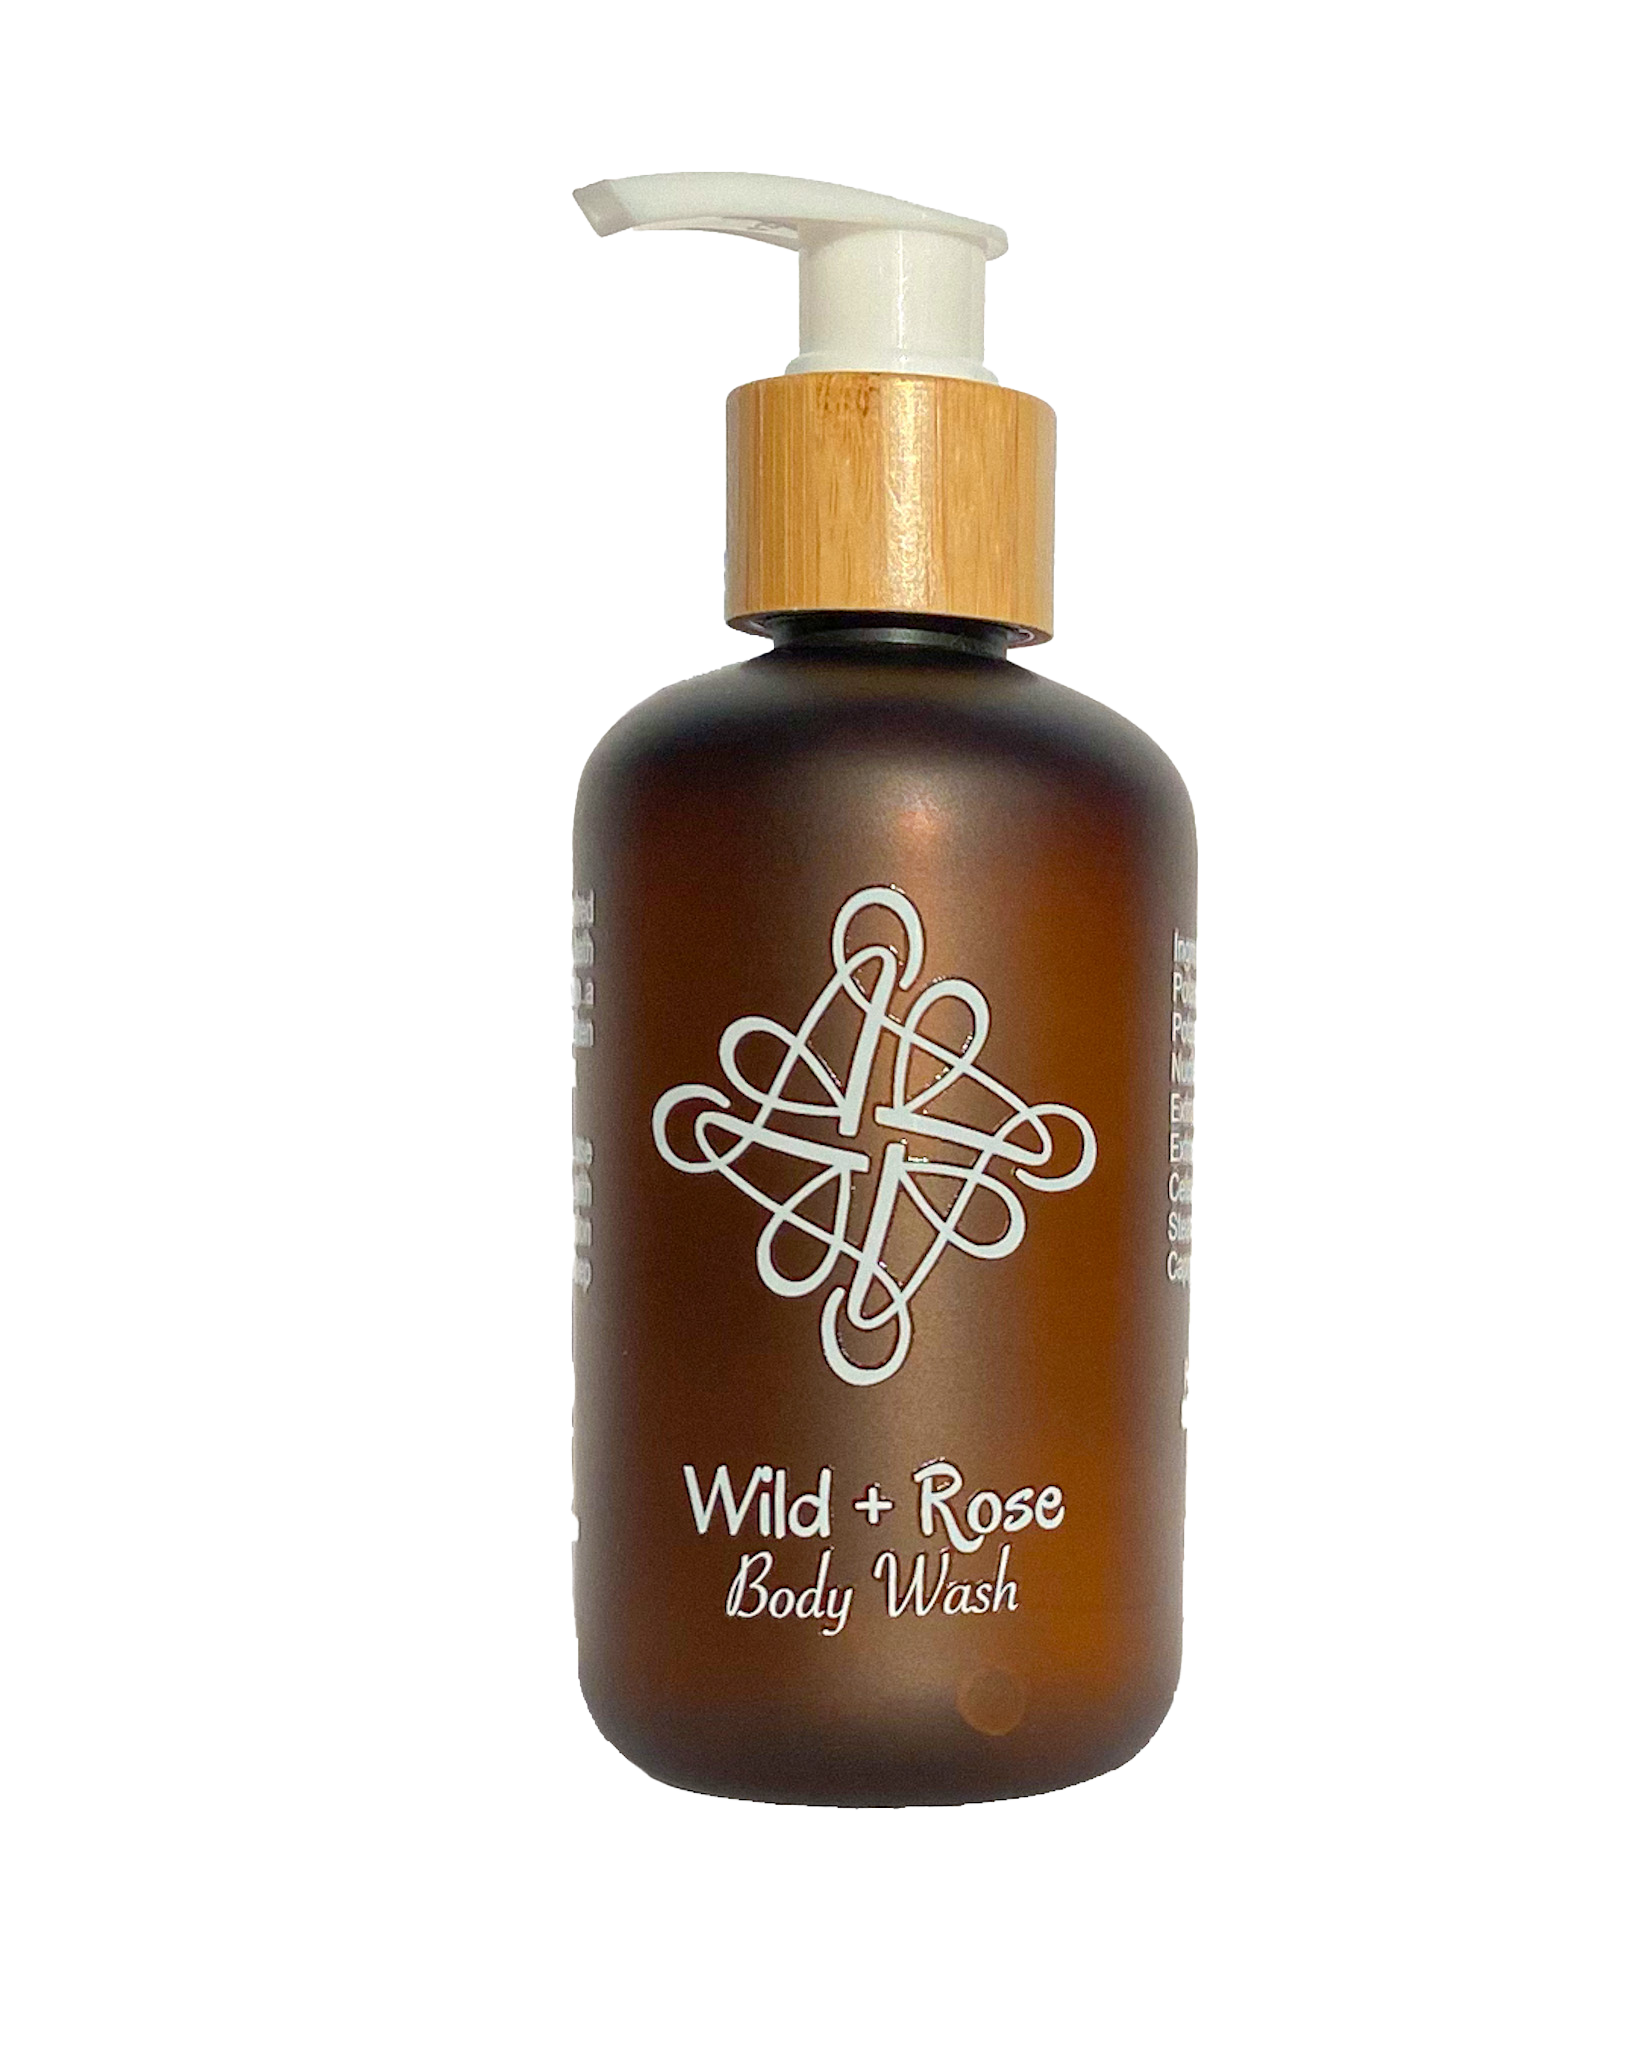 Wild Rose Body Wash